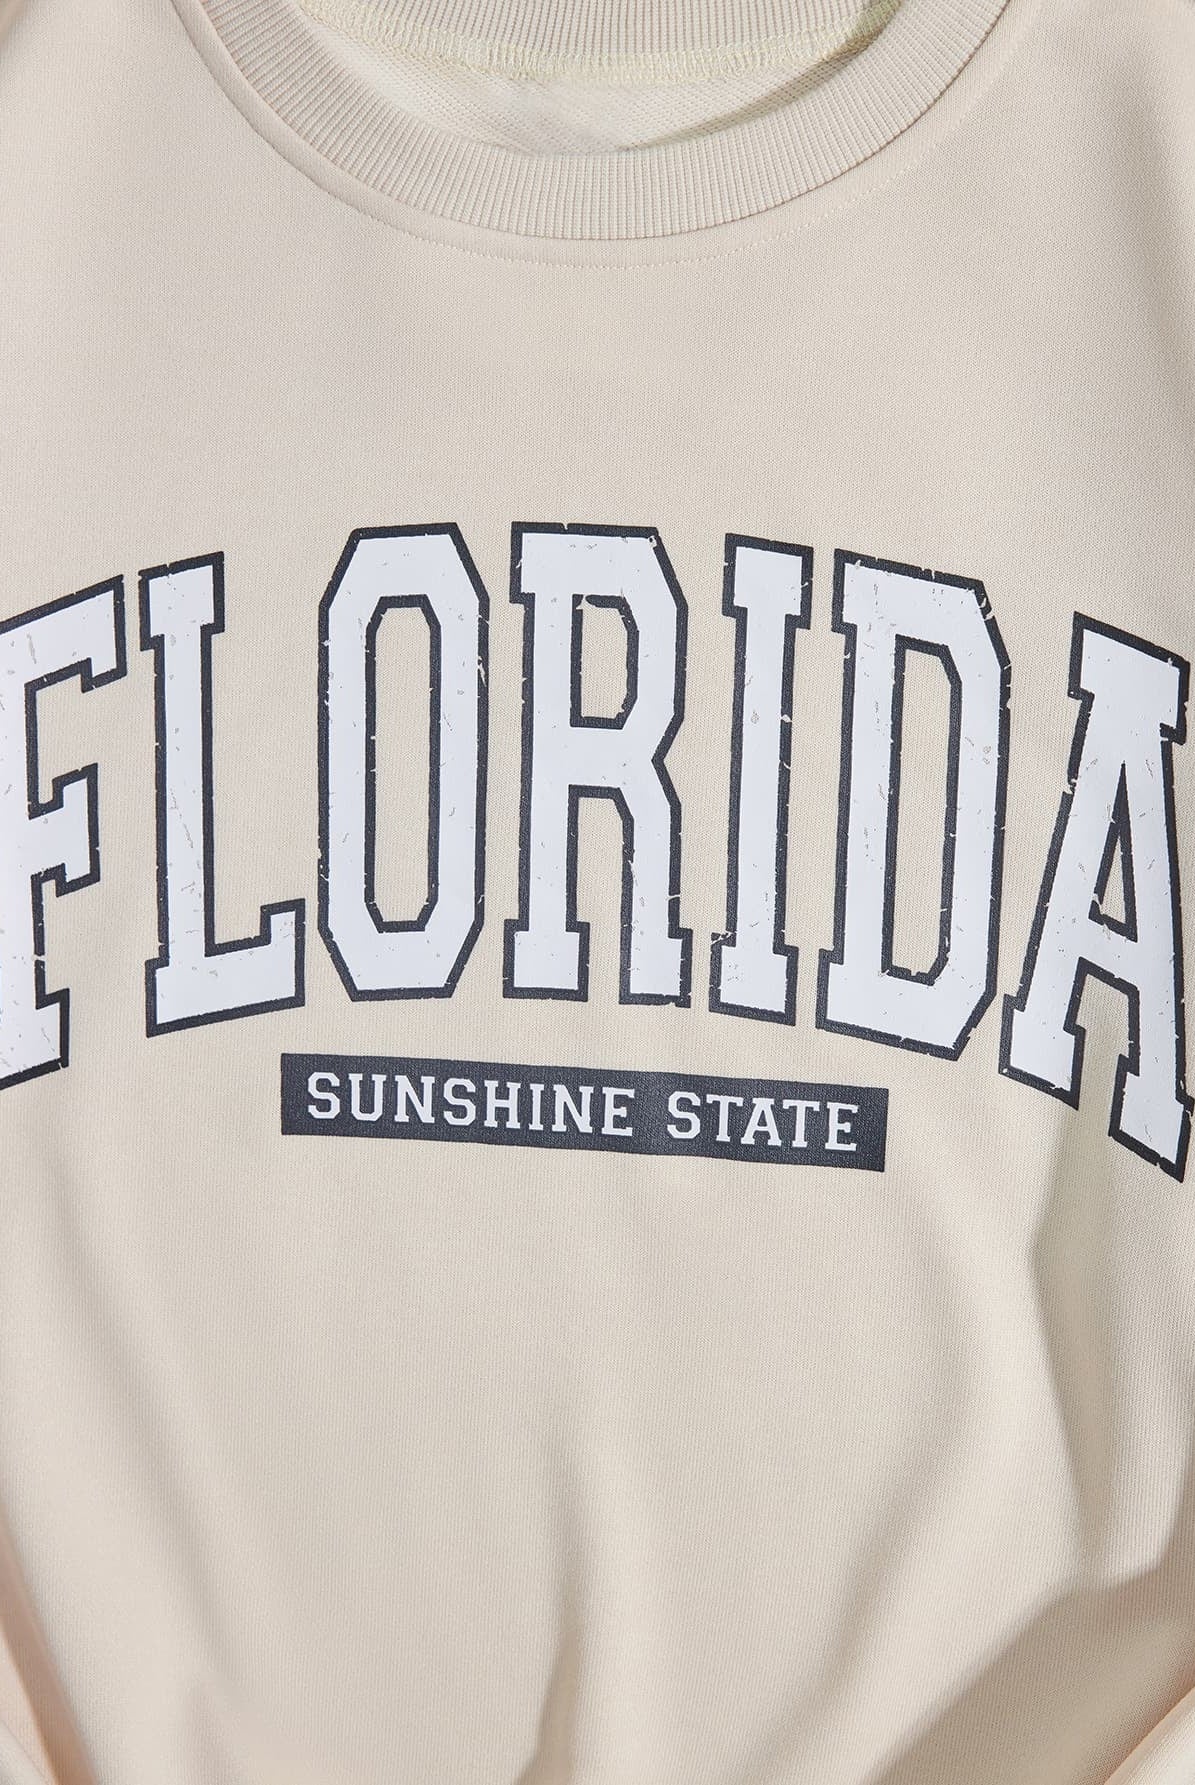 FLORIDA SUNSHINE STATE Dropped Shoulder Sweatshirt - GemThreads Boutique